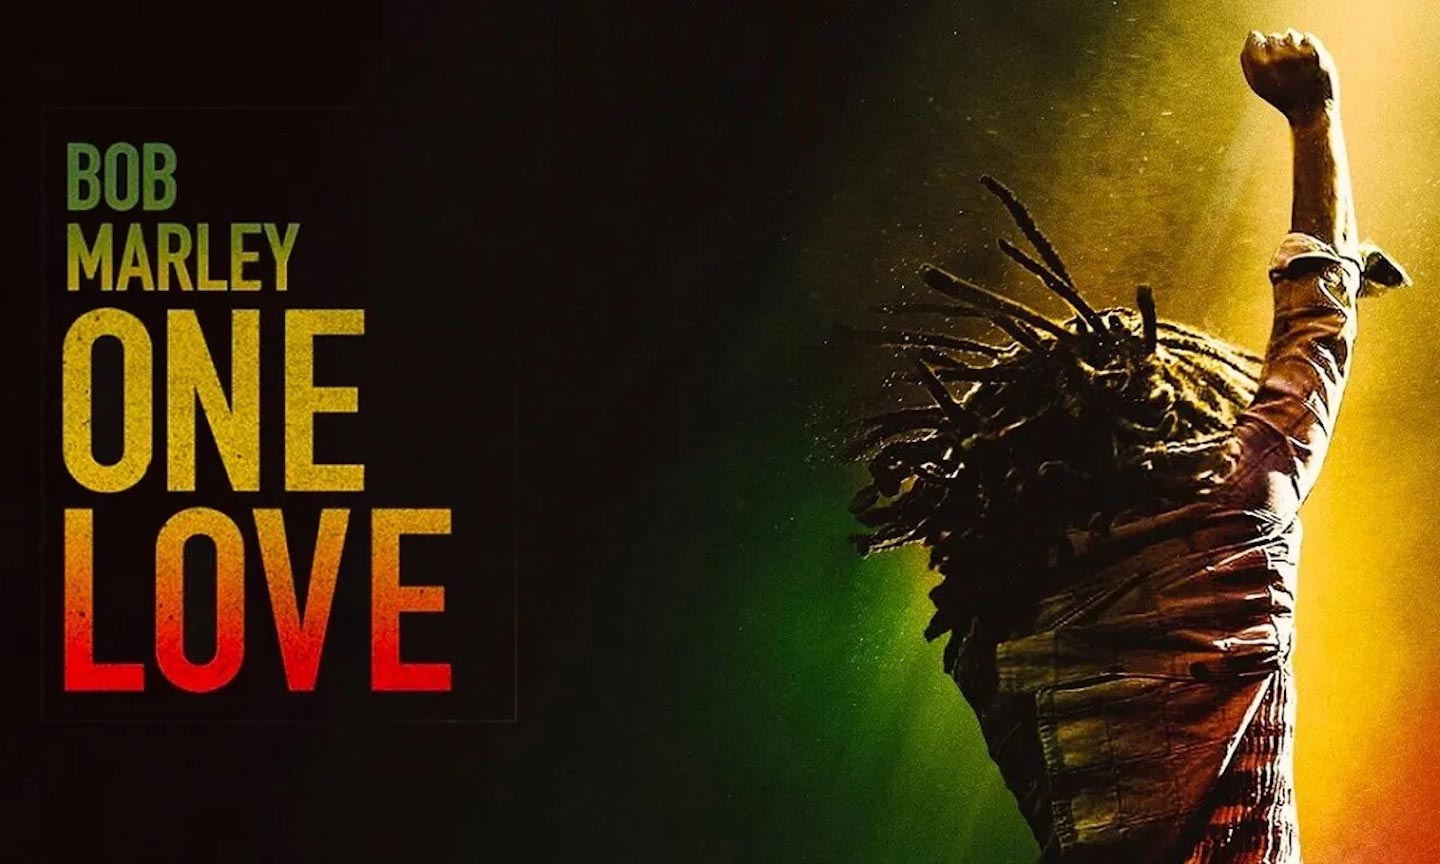 Bob Marley one love movie